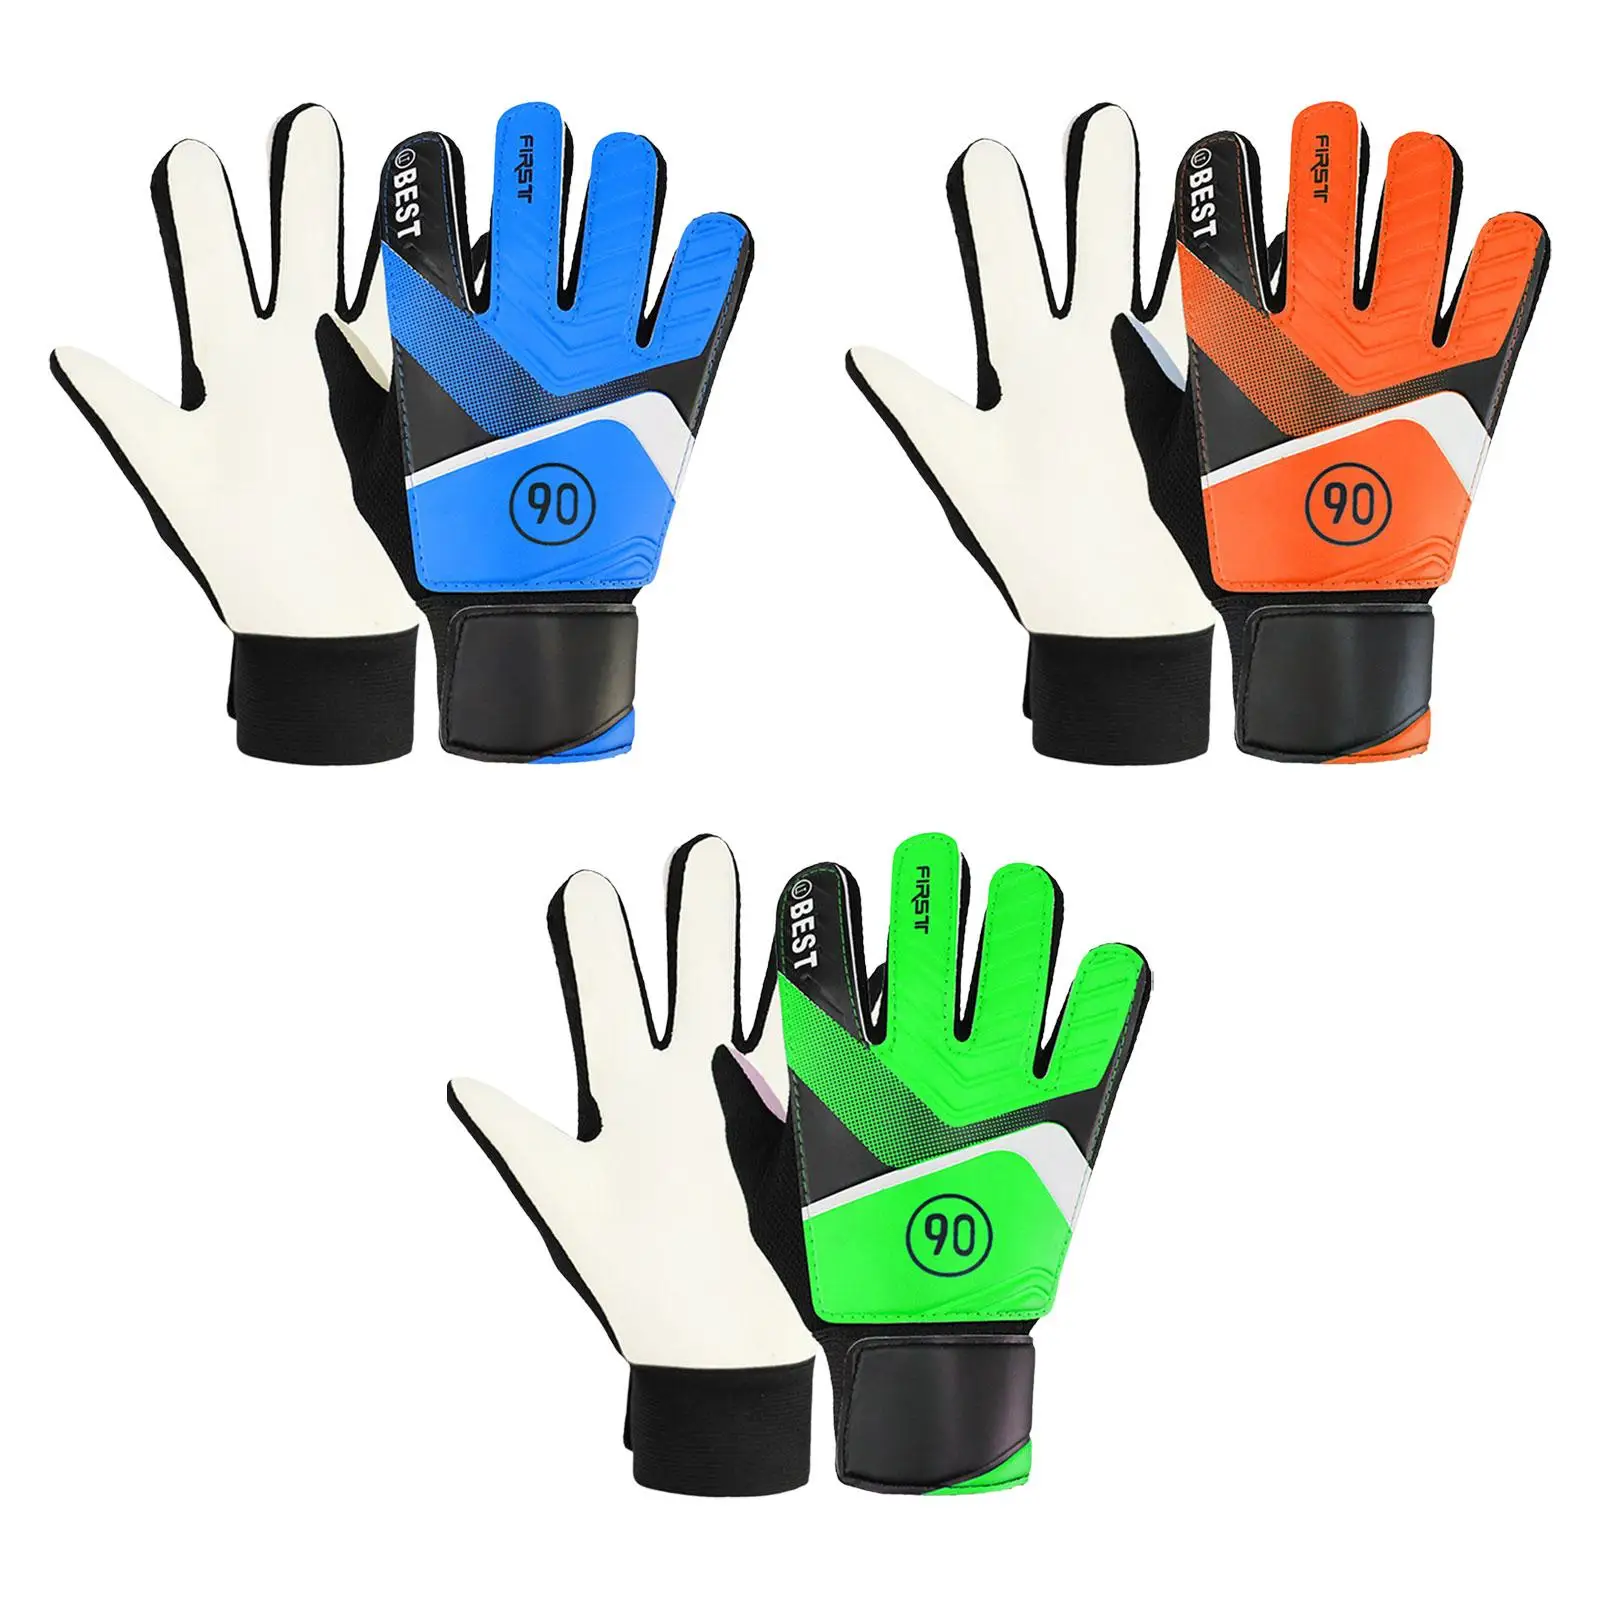 Football Goalkeeper Gloves High Performance Nonslip Anticollision Comfortable Training Strong Grip Breathable for Boys Girls